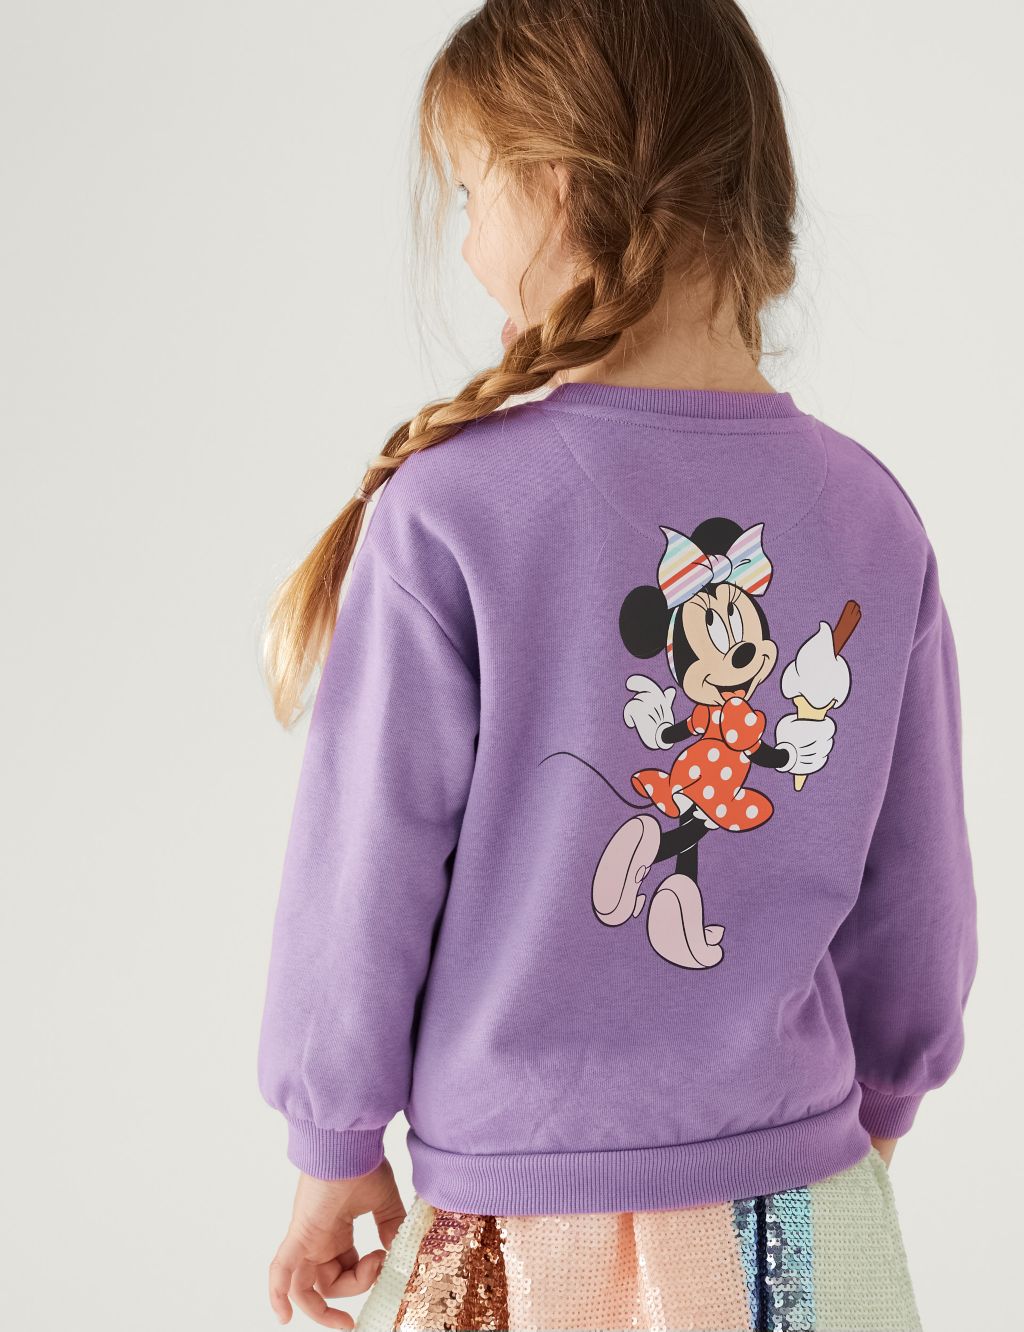 Cotton Rich Minnie Mouse™ Sweatshirt (2-8 Yrs) image 3